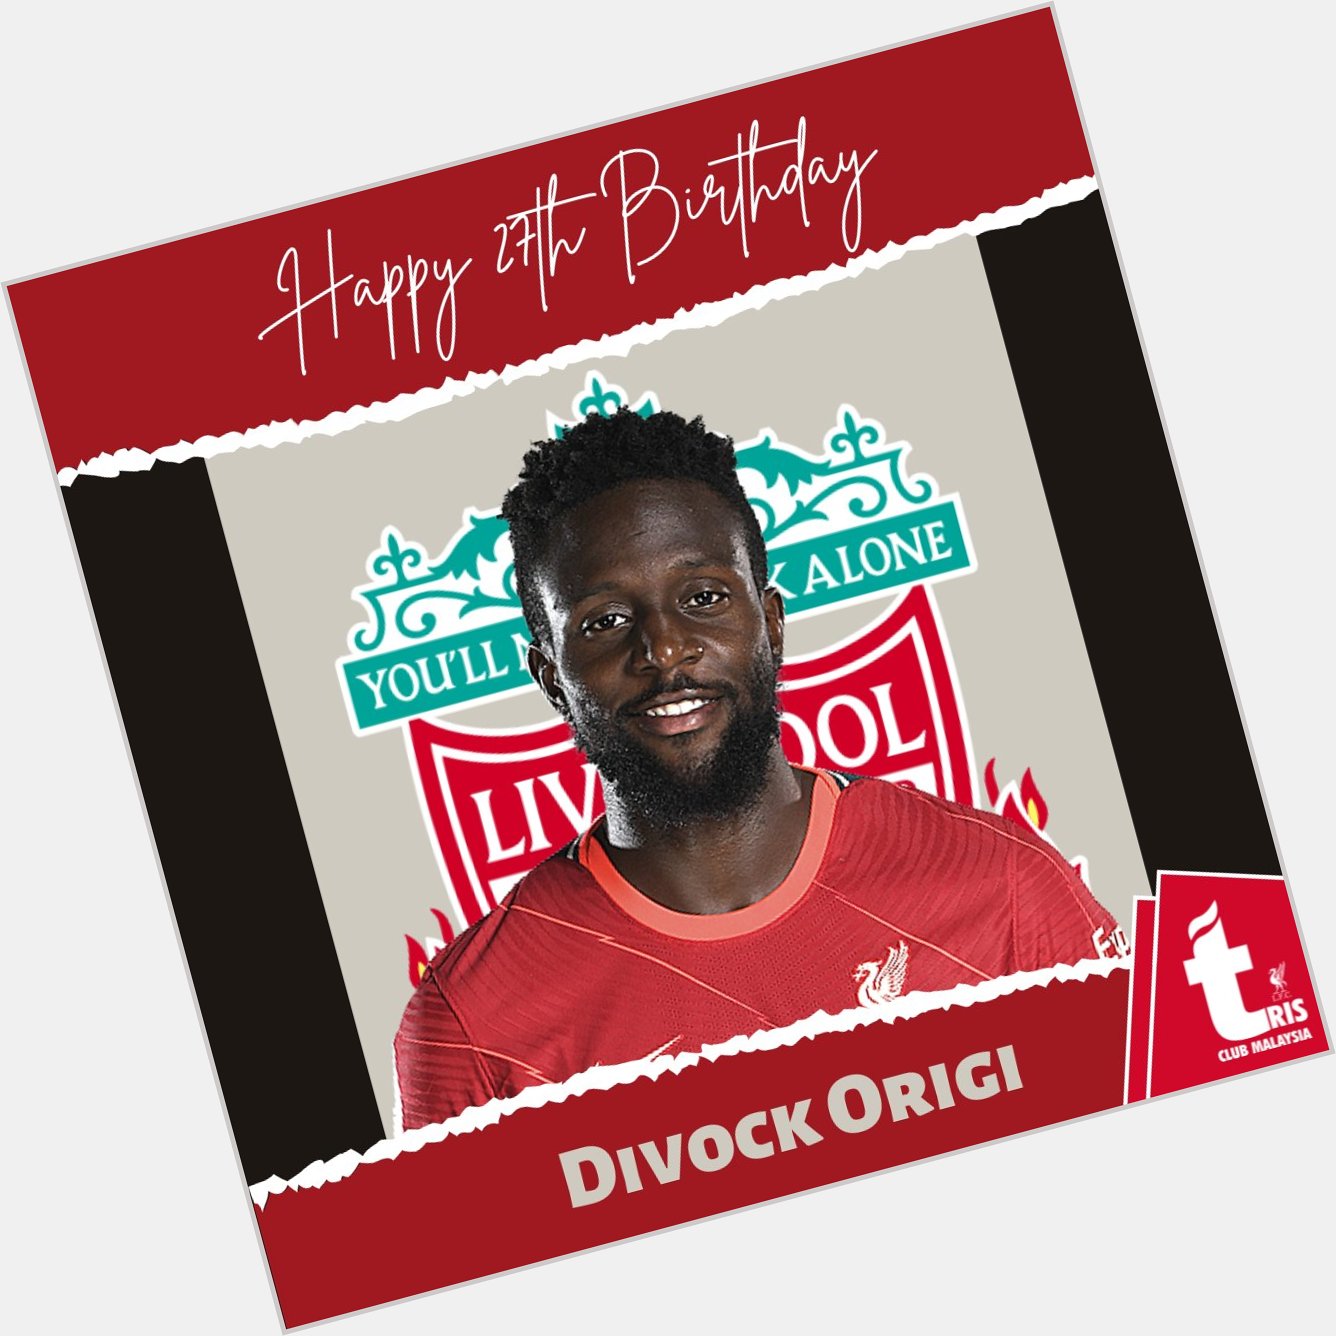 Happy 27th birthday to Divock Origi. 